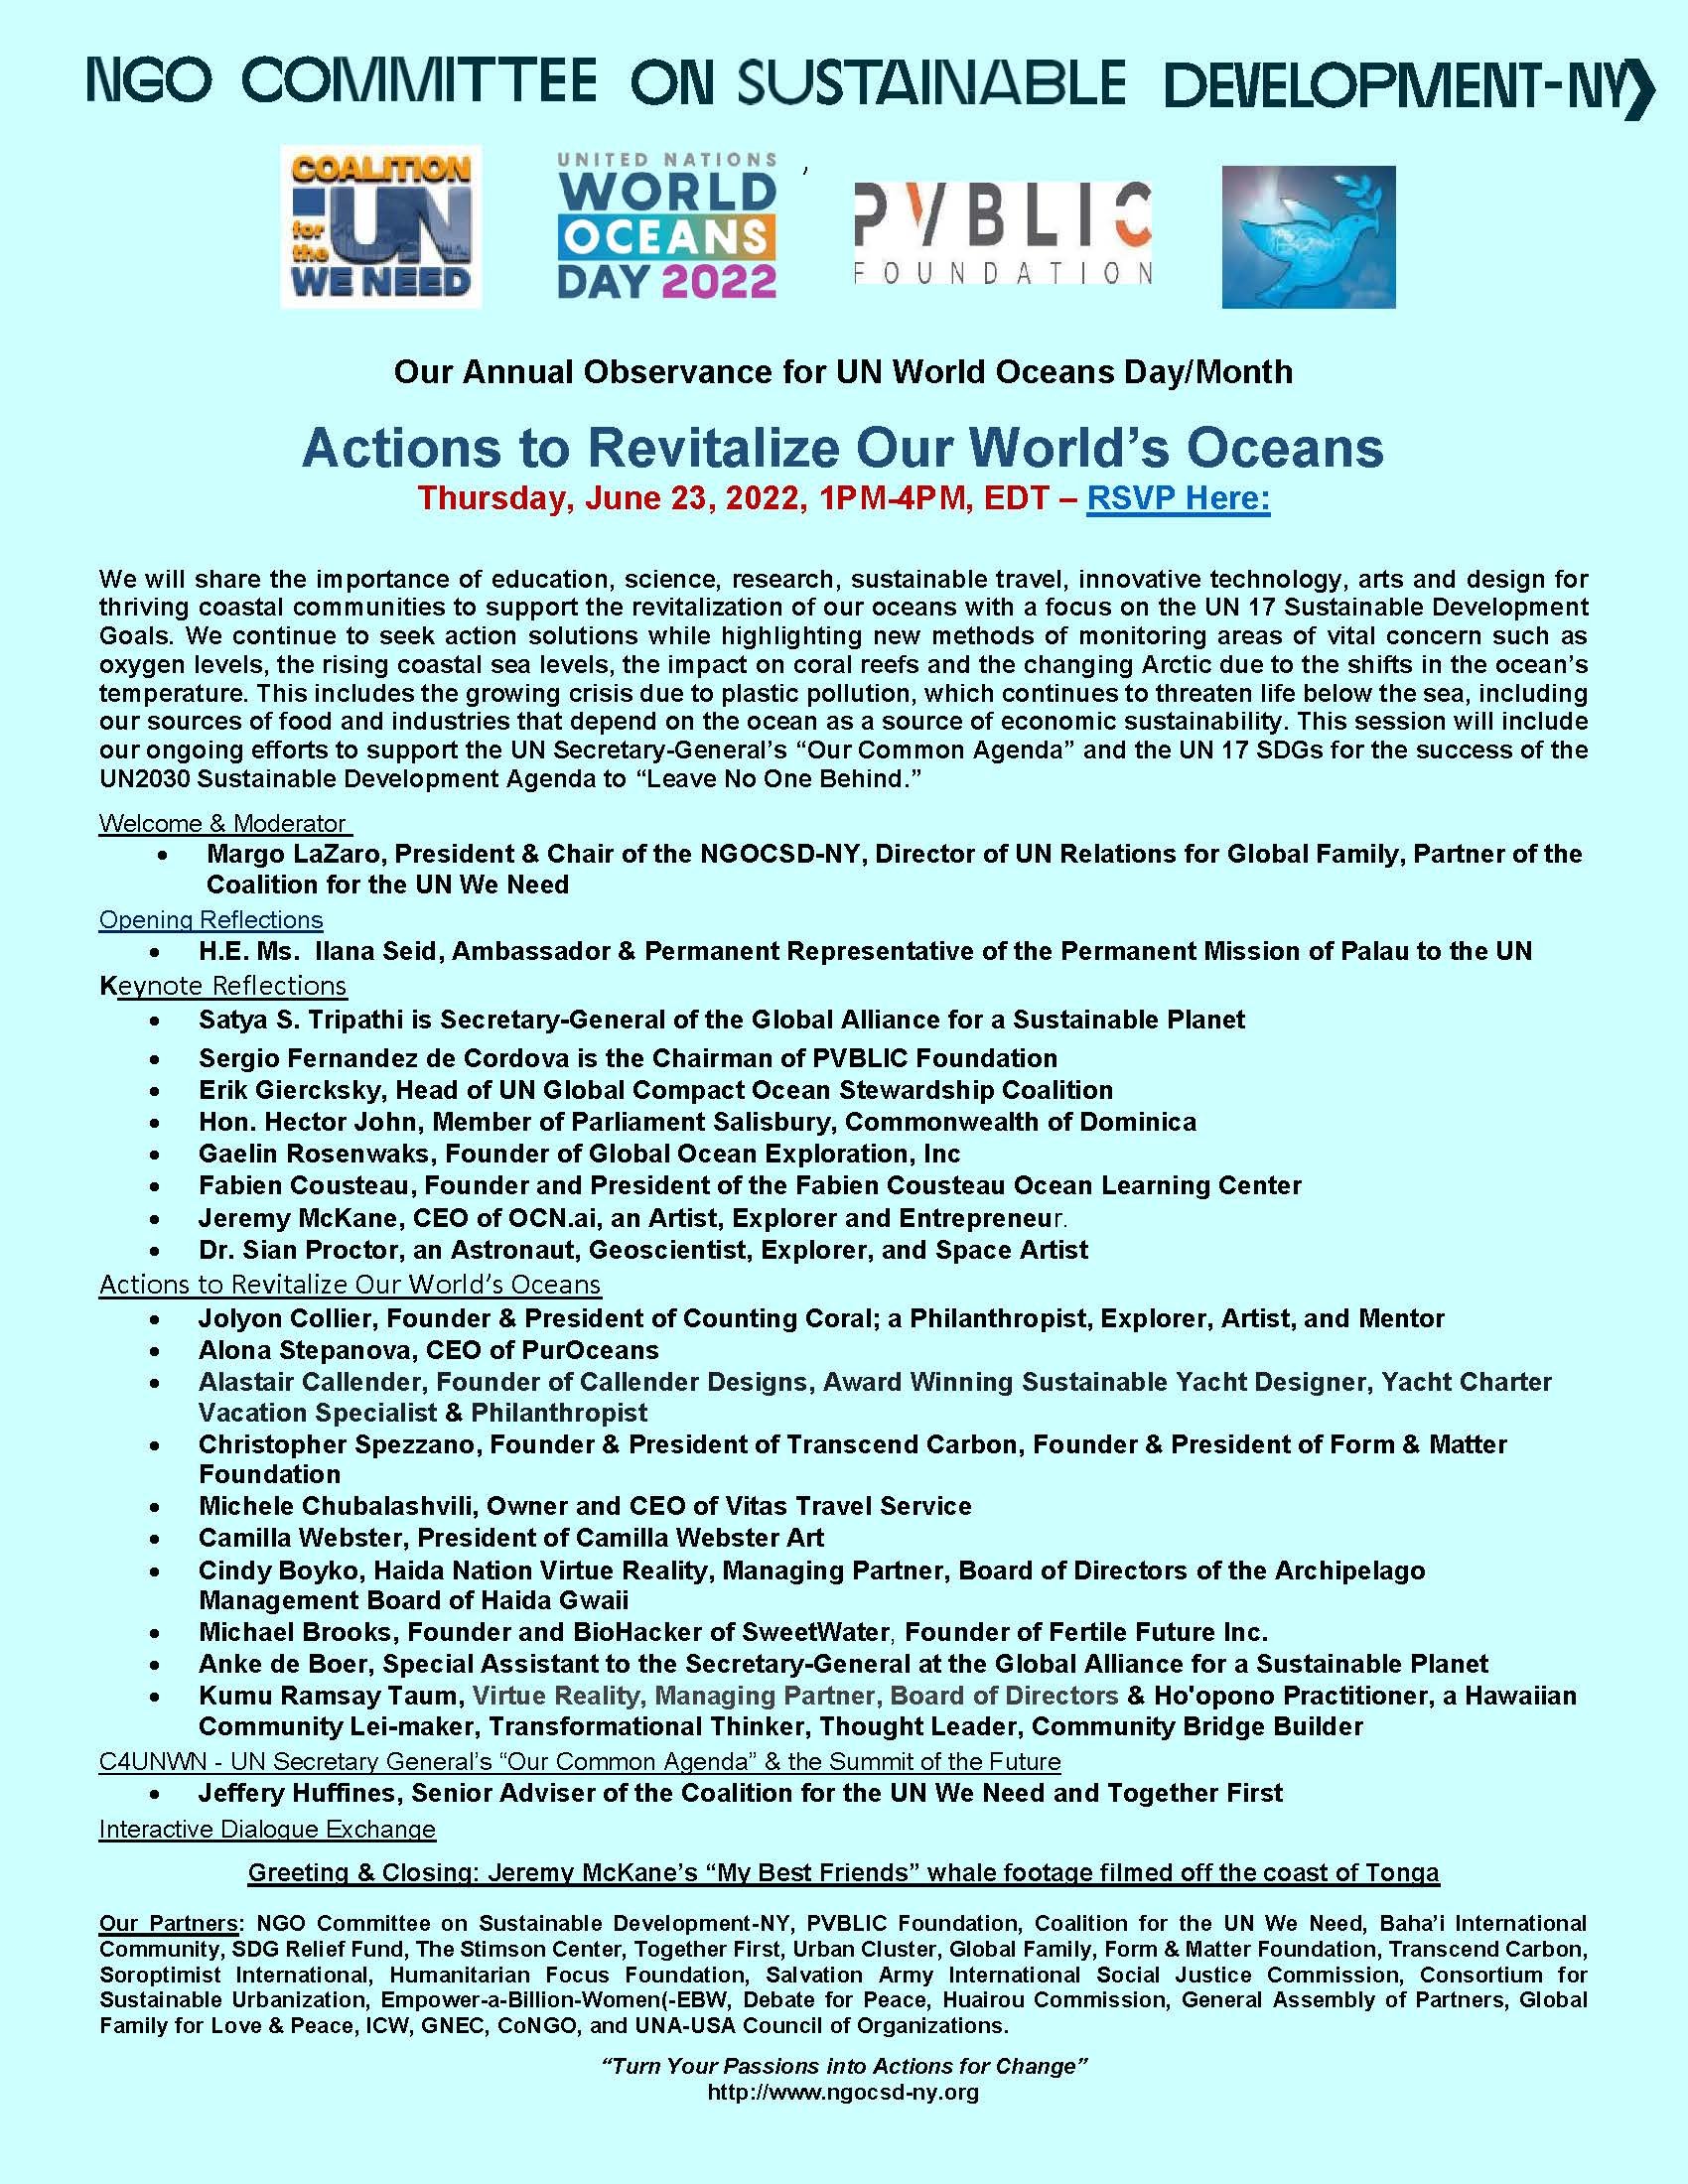 NGOCSD-NY C4UN PVBLIC -World Oceans Day Invitation 6-23-2022 - D3abc.jpg